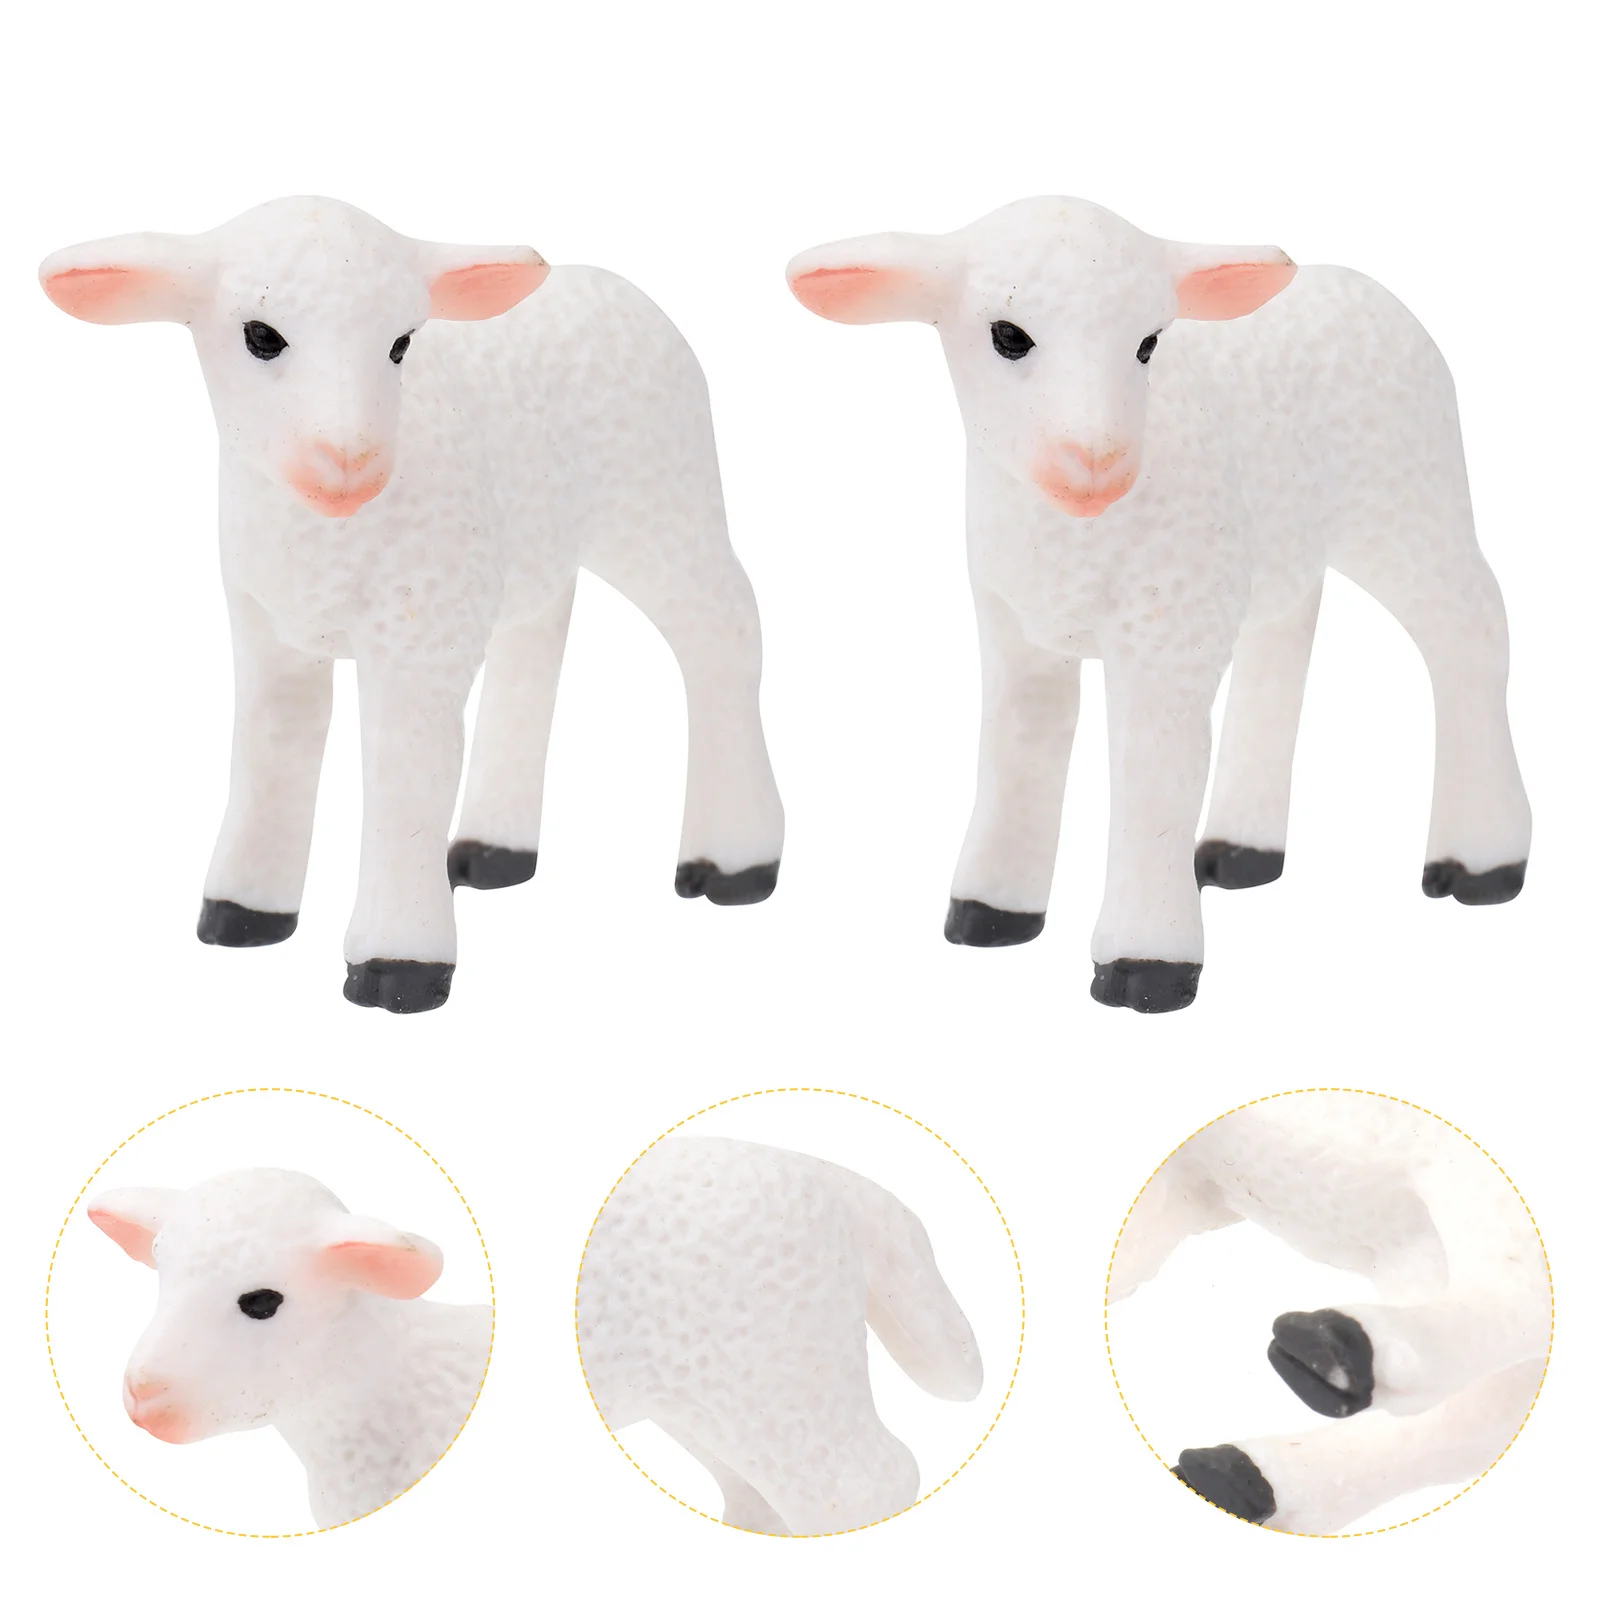 

2 Pcs Lamb Ornament Lovely Artware Animal Figurine Decorative Handicrafts Shaped Silica Gel Model Statues Child Home